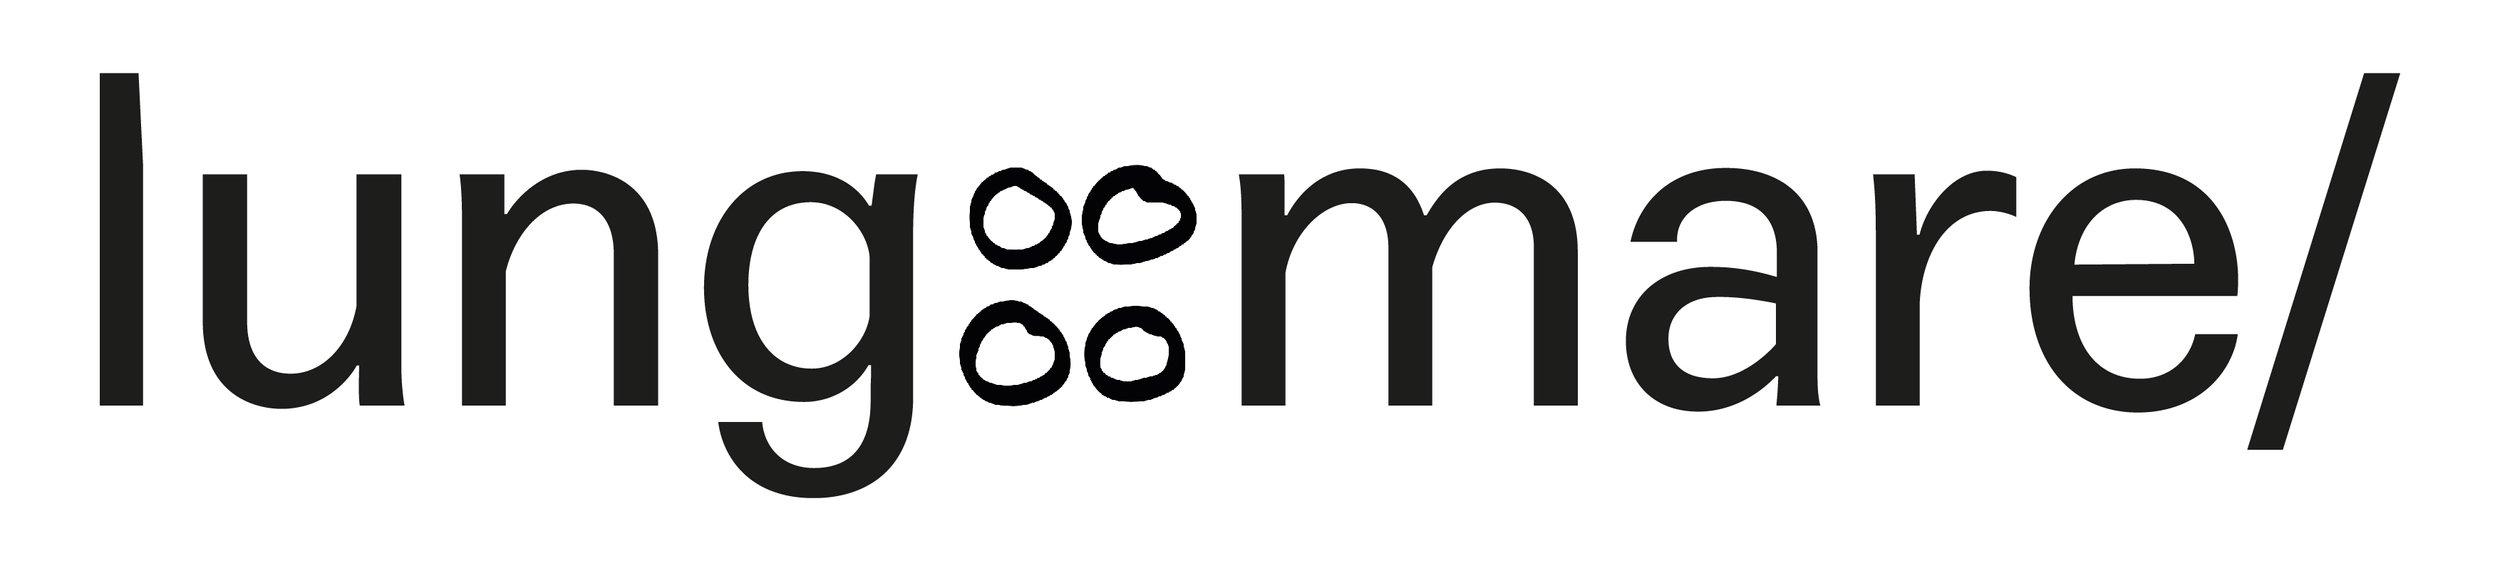 LM_coop_logo_RGB-02.jpg